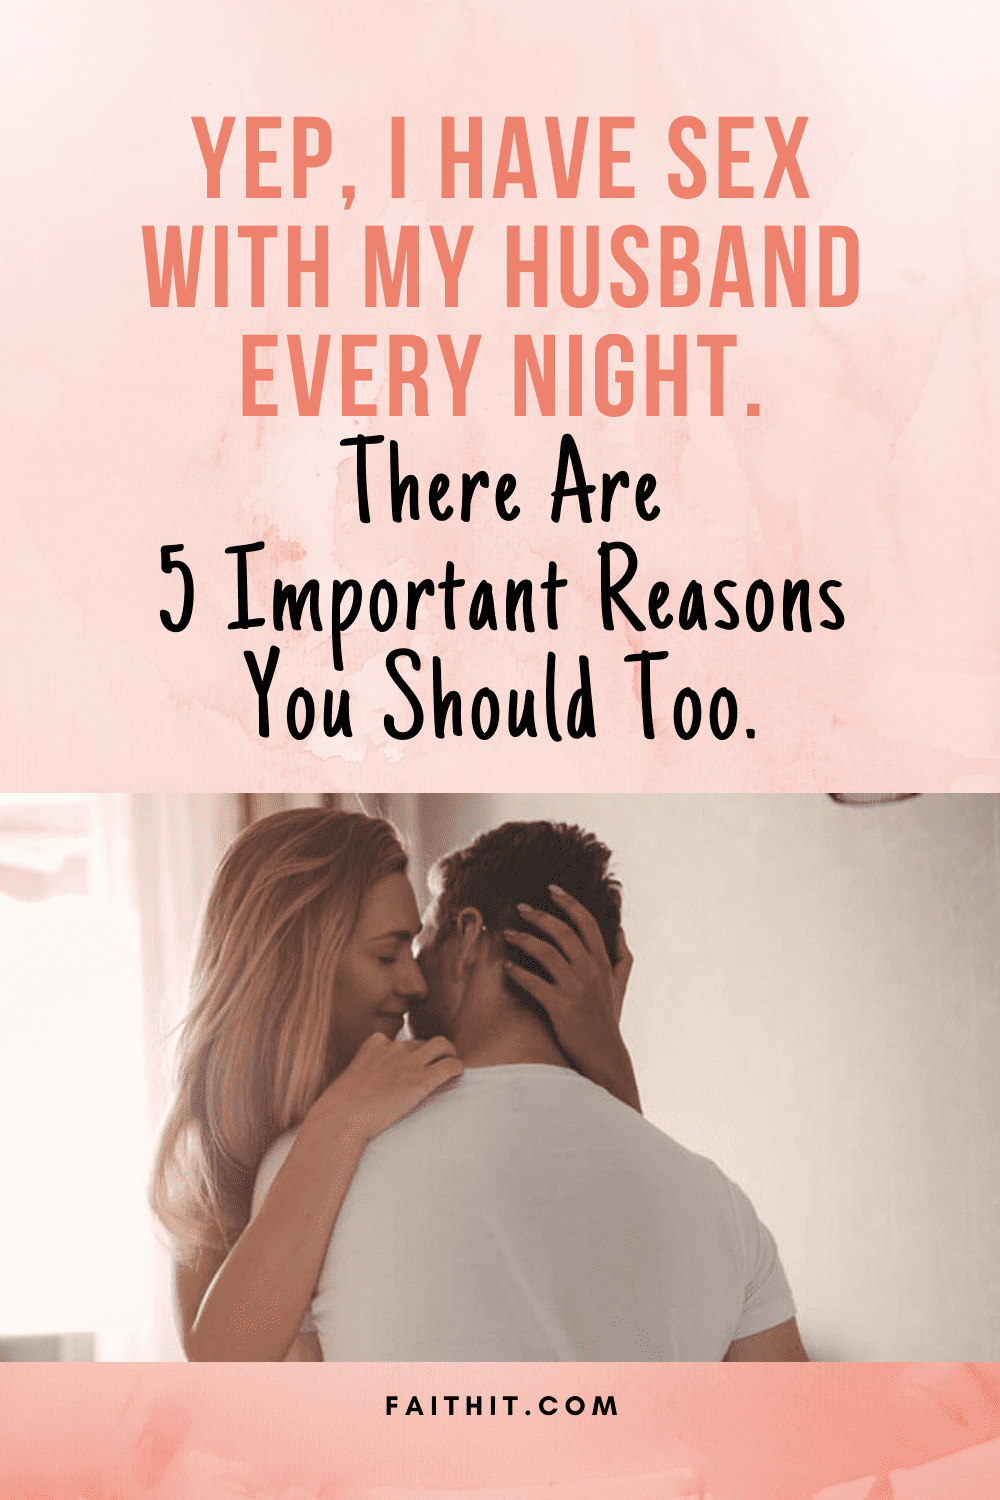 Yep, I Have Sex With My Husband Every Night photo